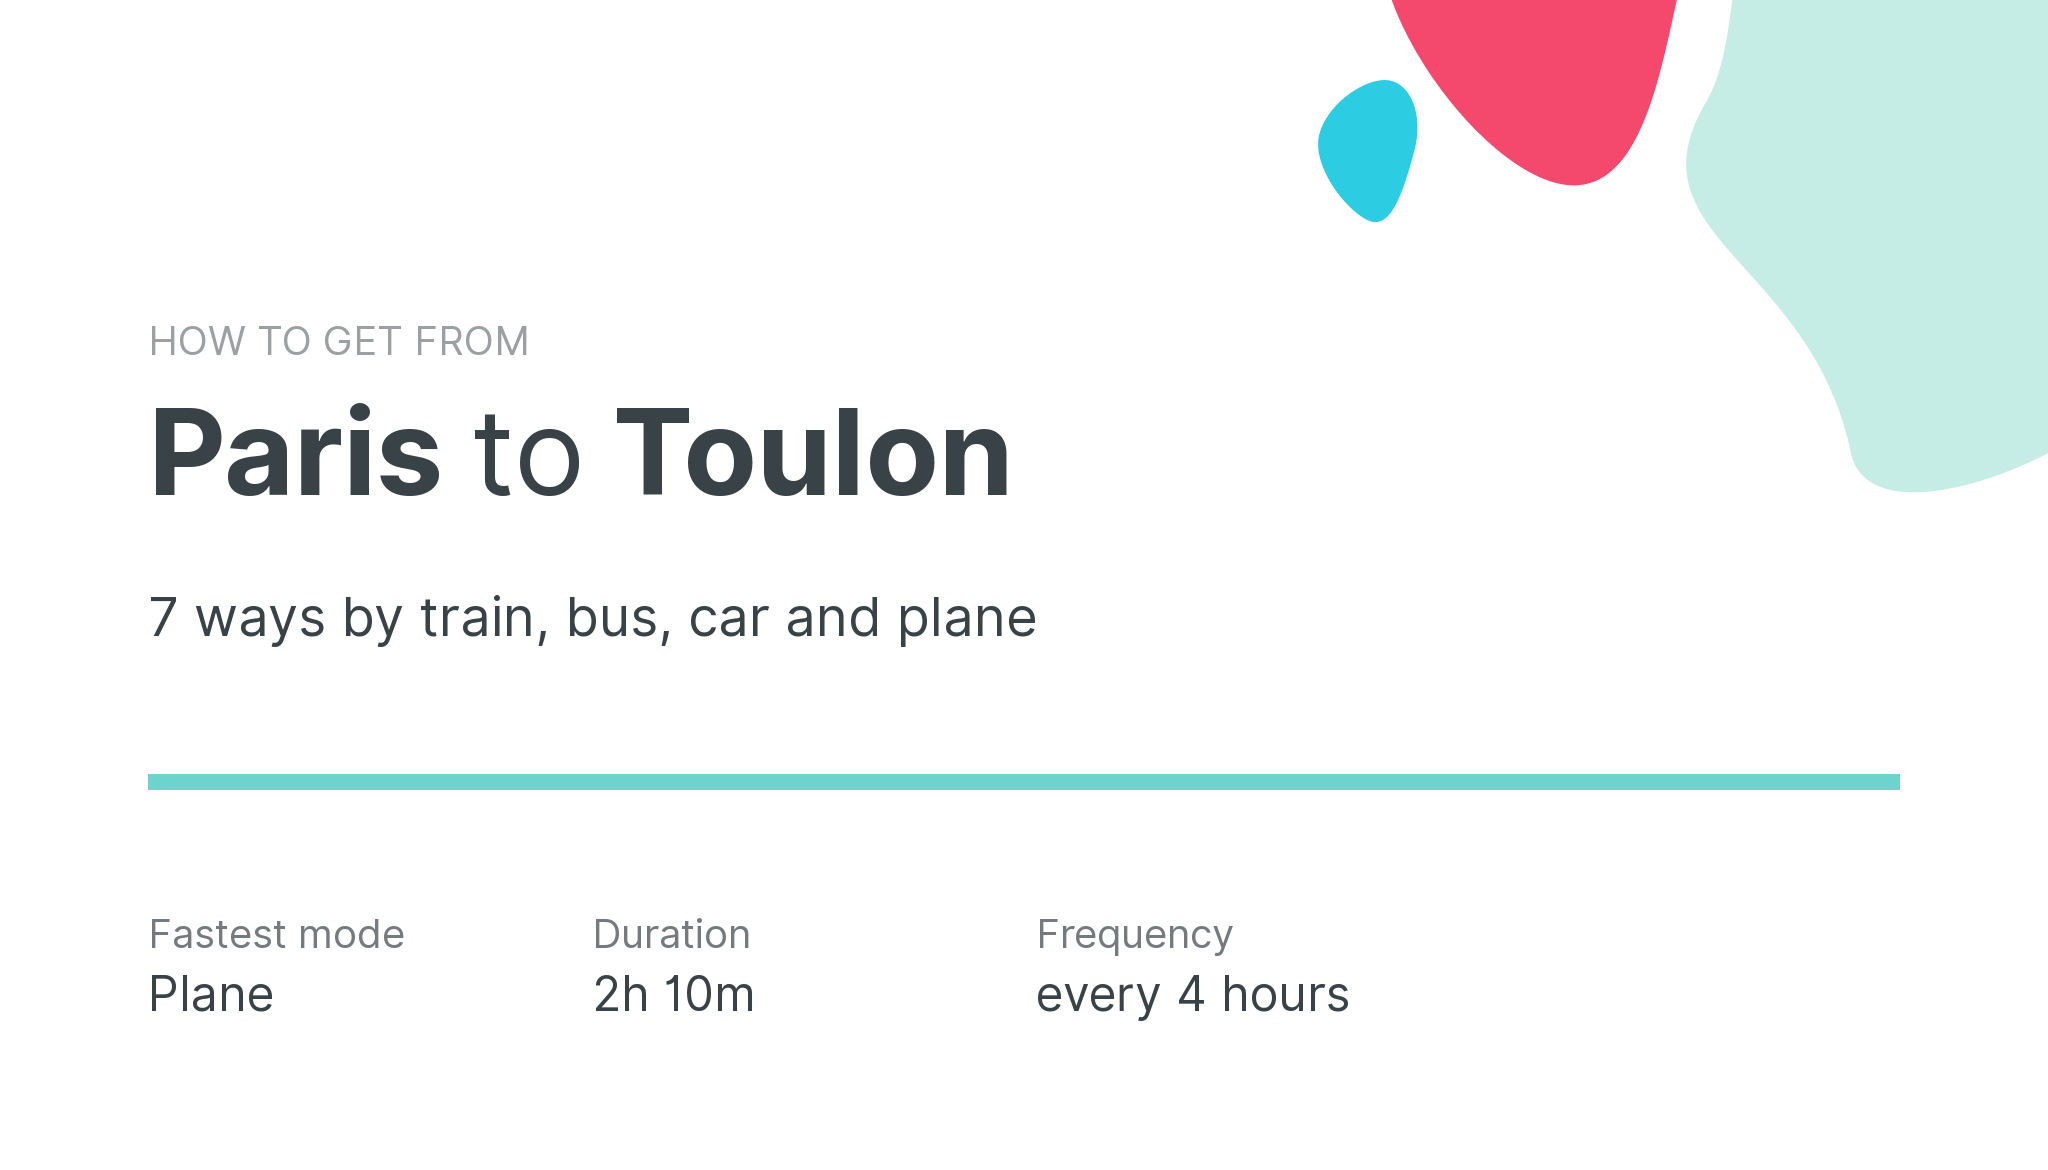 How do I get from Paris to Toulon